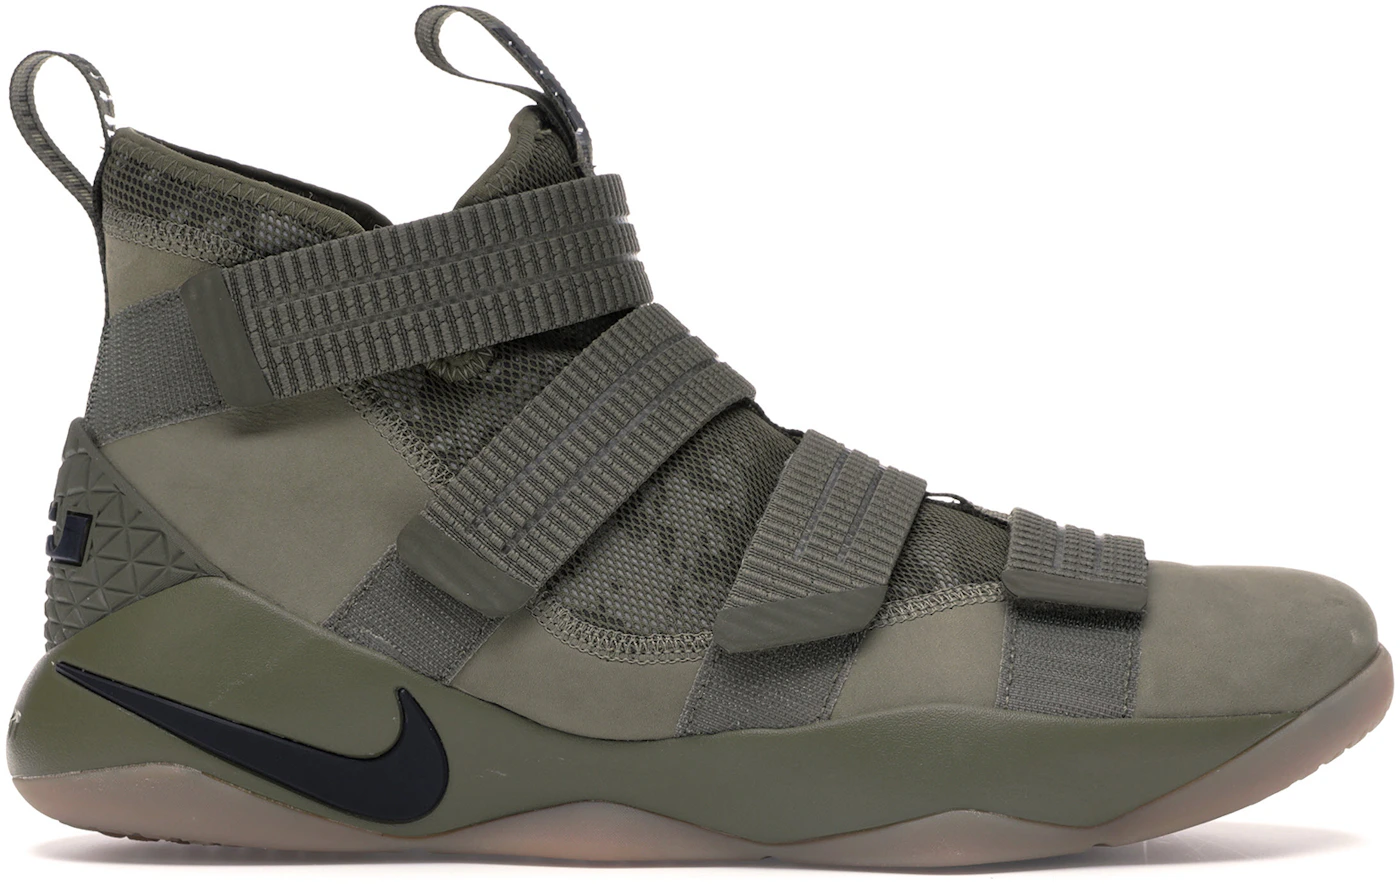 Nike Men's LeBron Soldier XI Basketball Shoe